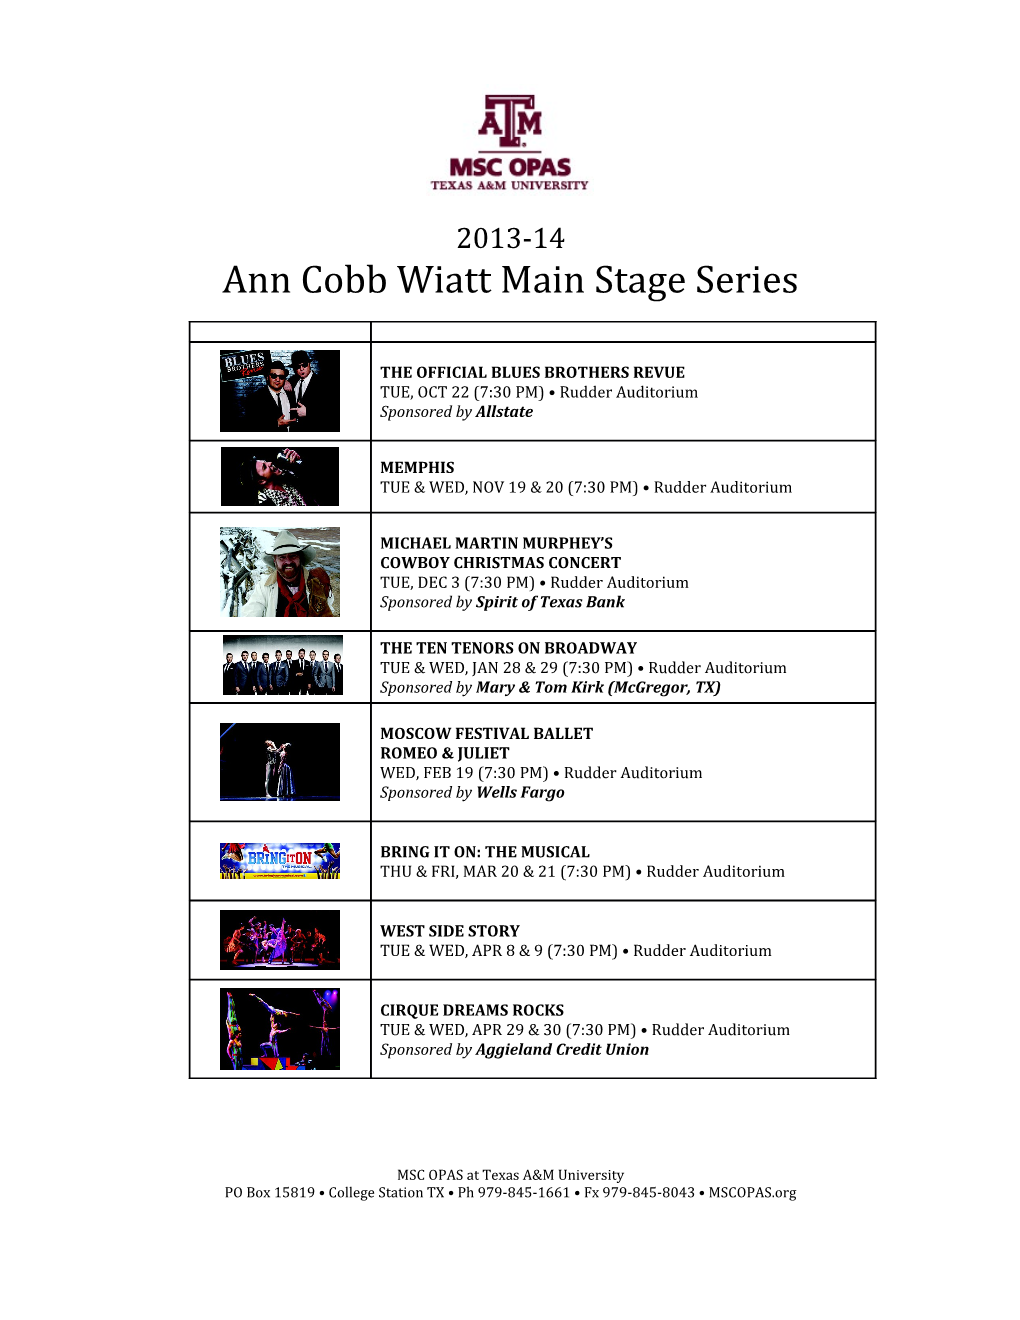 Ann Cobb Wiatt Main Stage Series